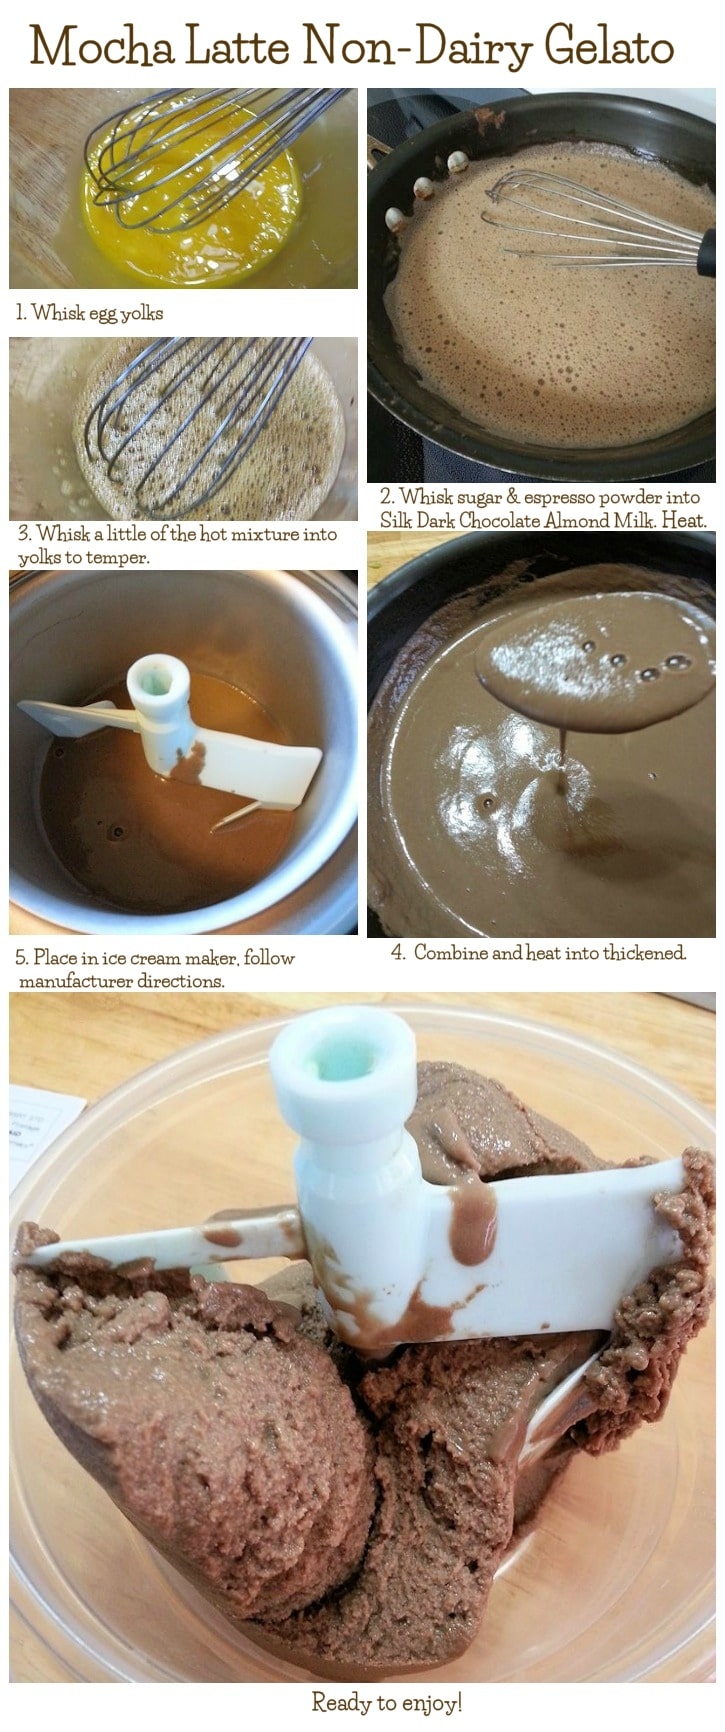 Mocha Latte Non-Dairy Gelato instructions